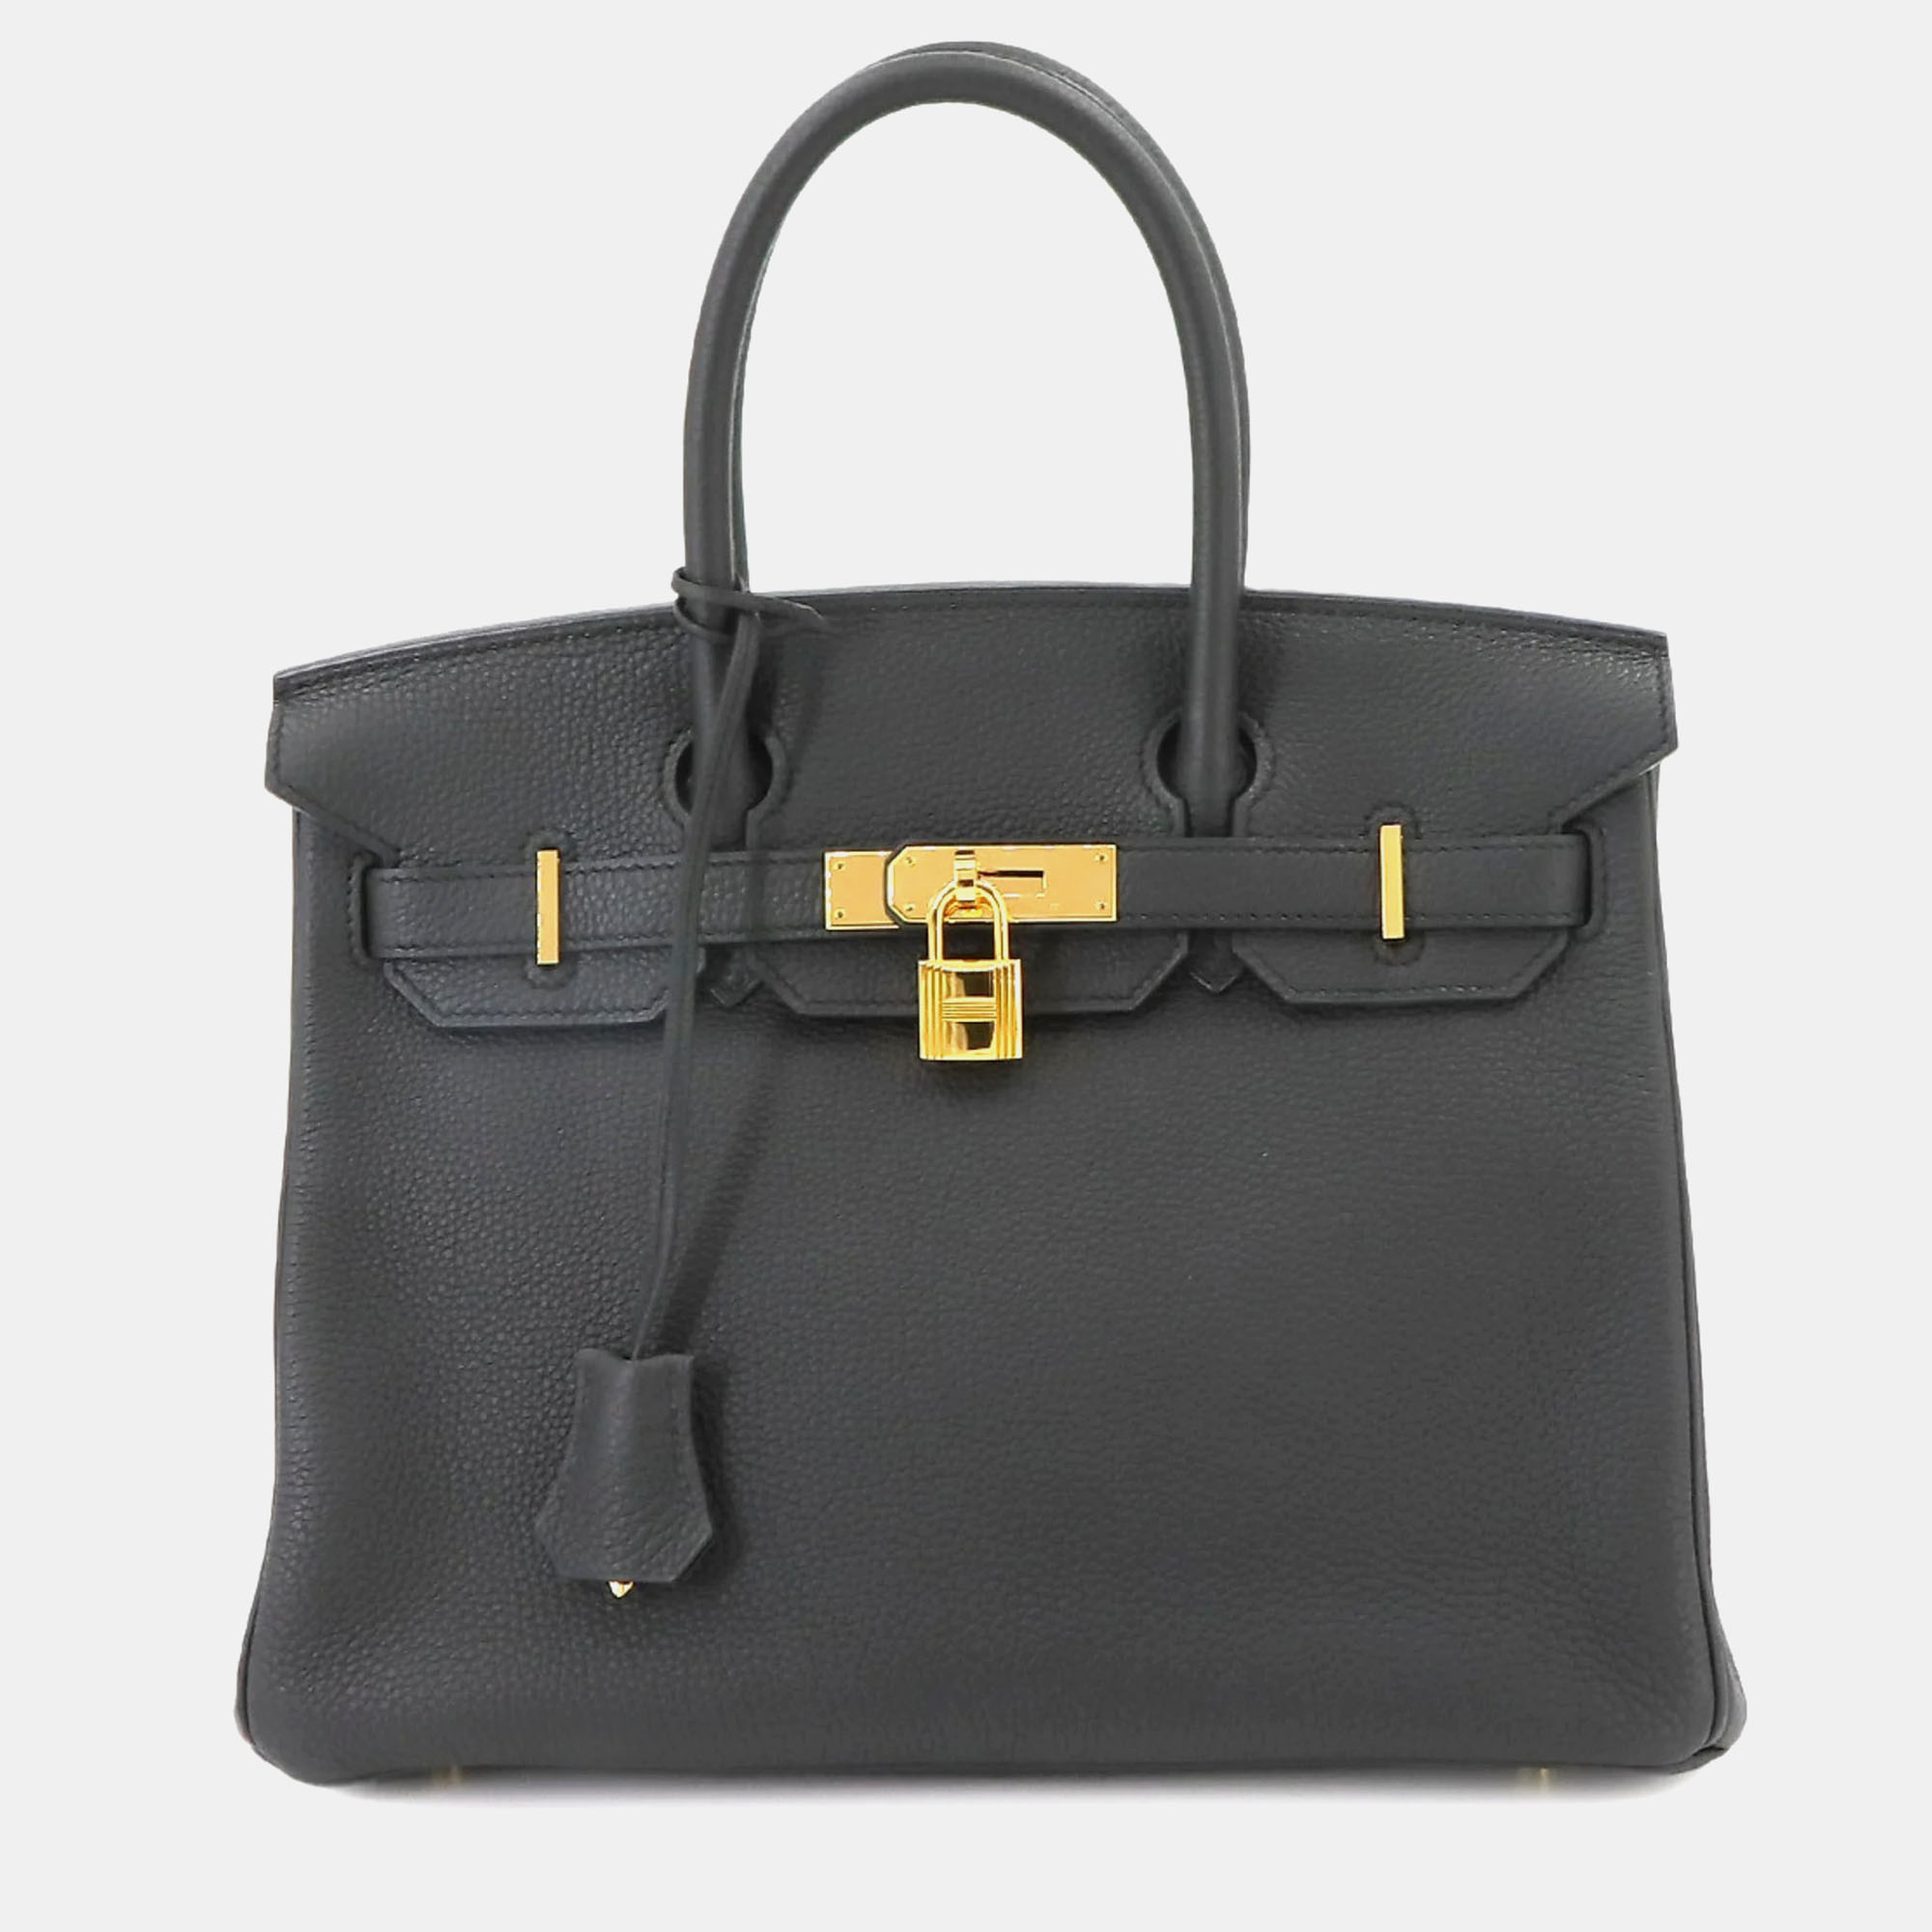 Hermes black togo birkin 30 handbag